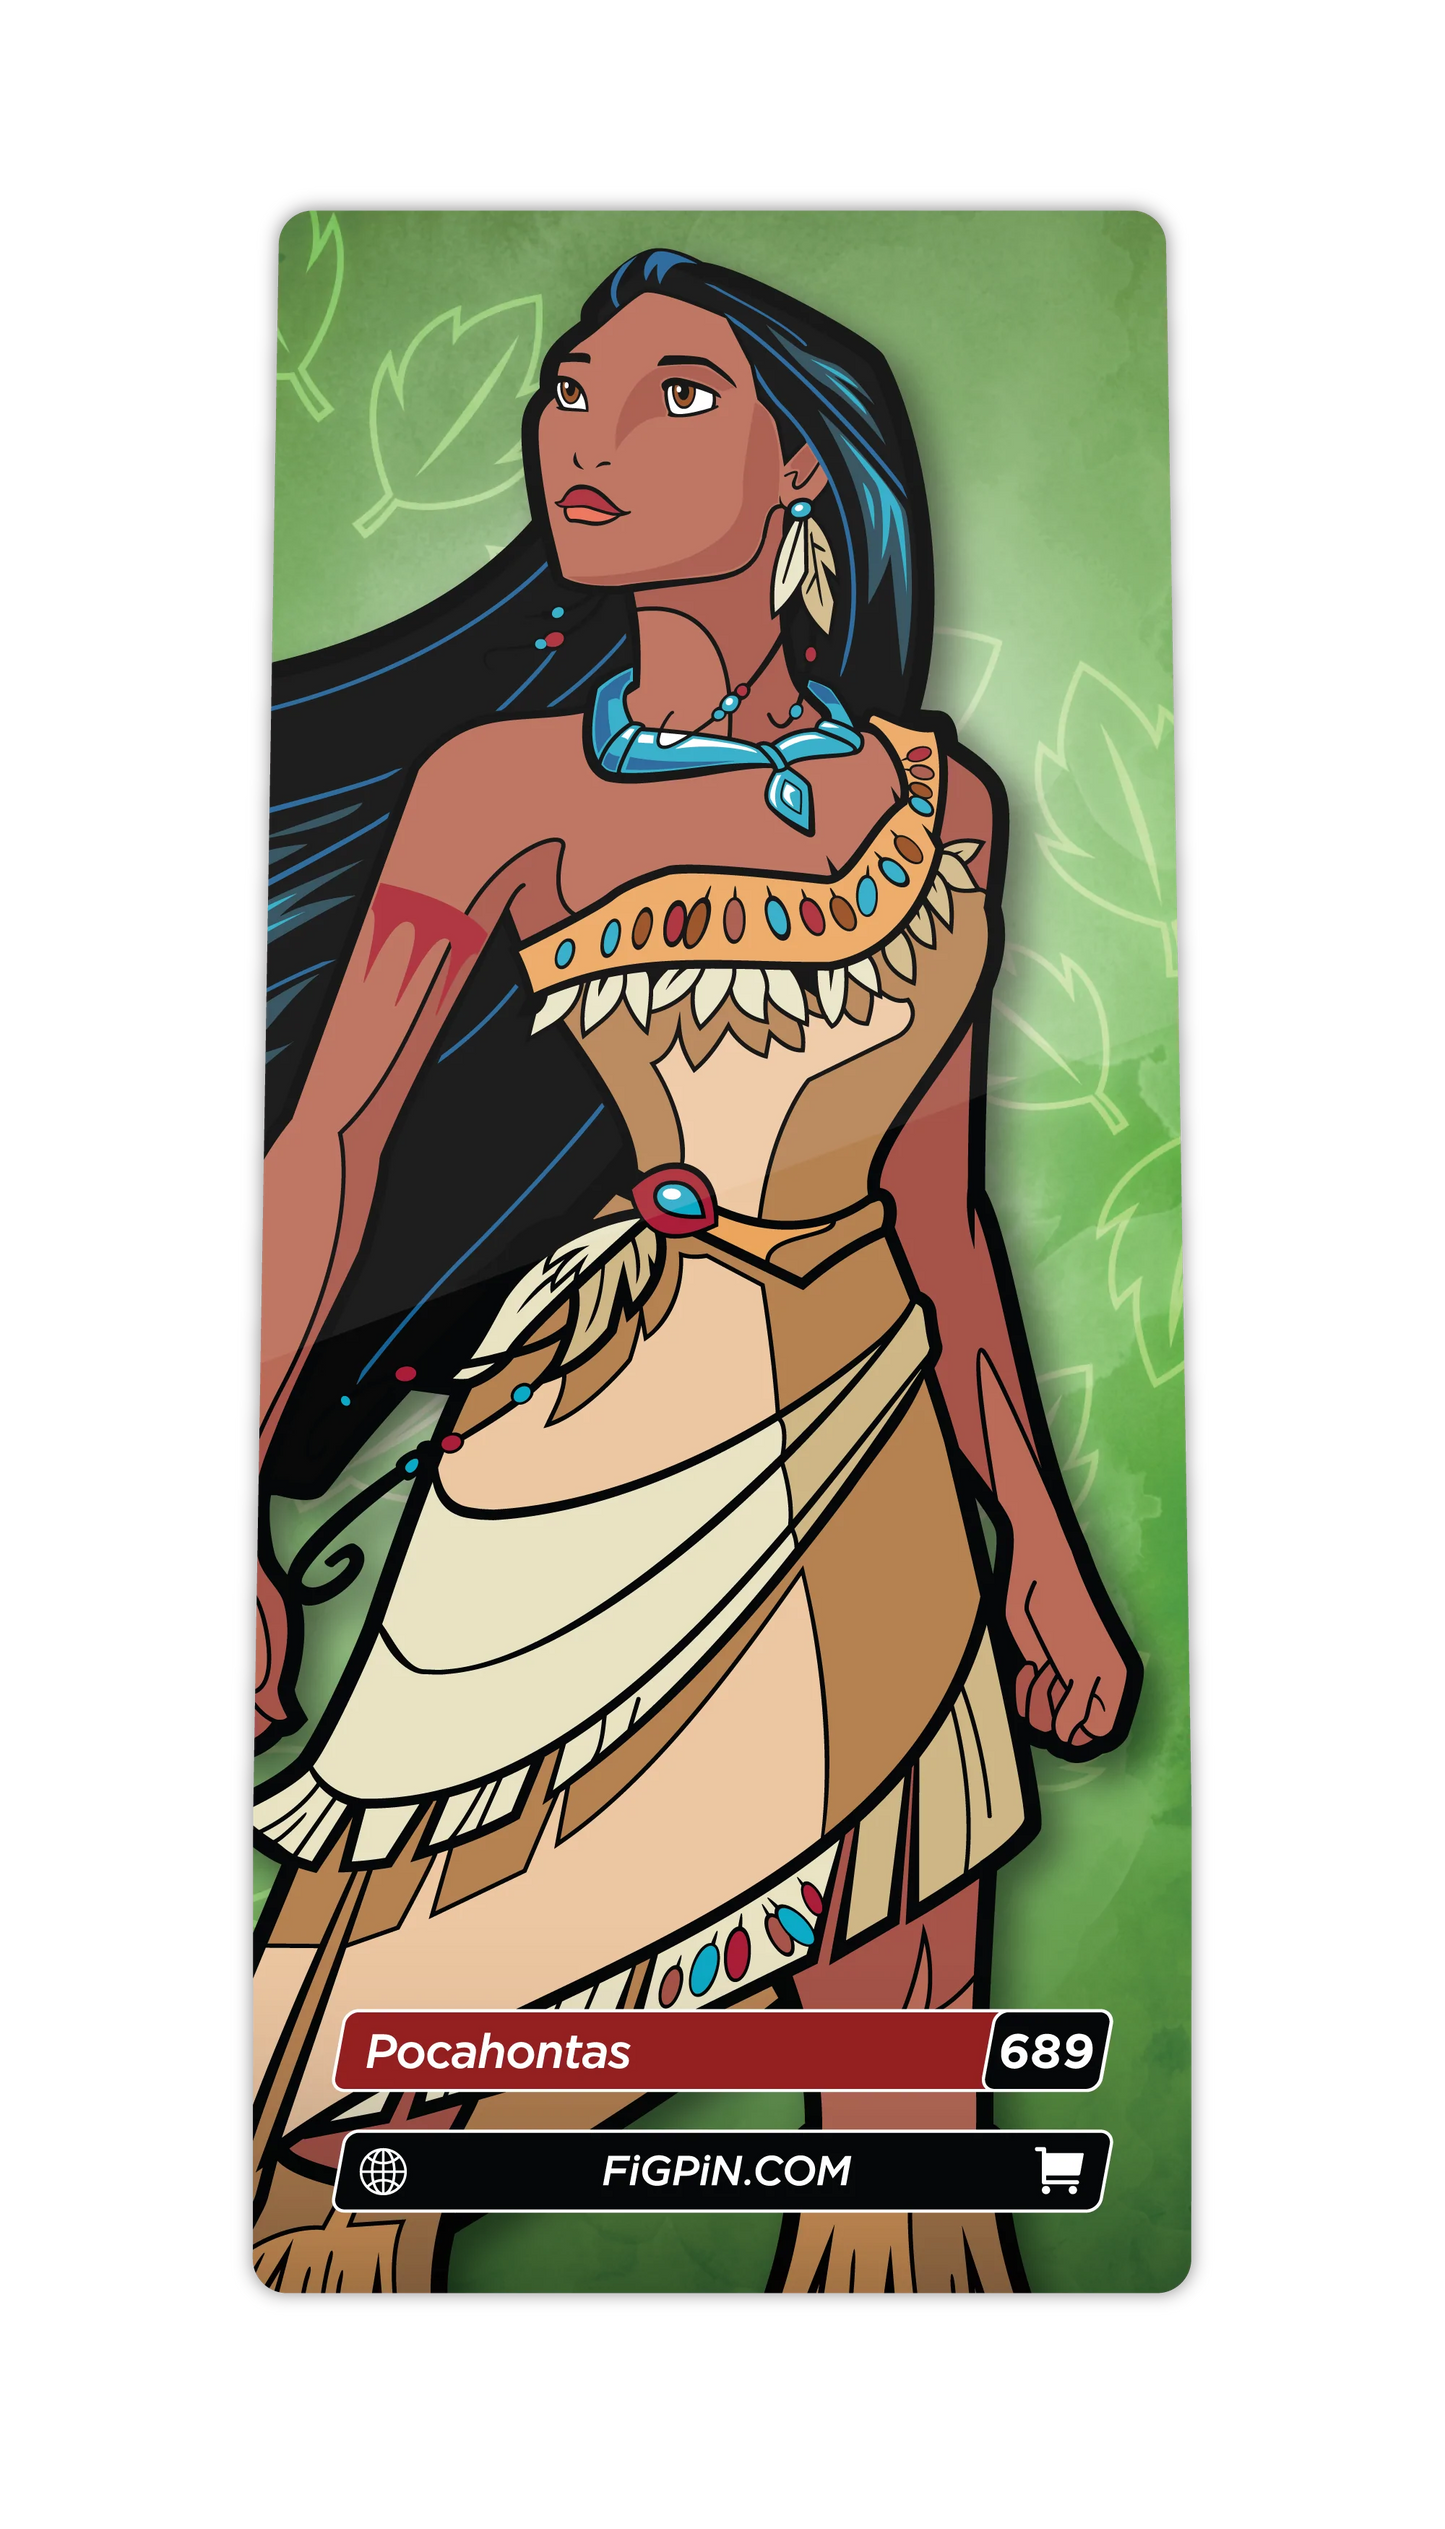 Pocahontas (689) FiGPiN